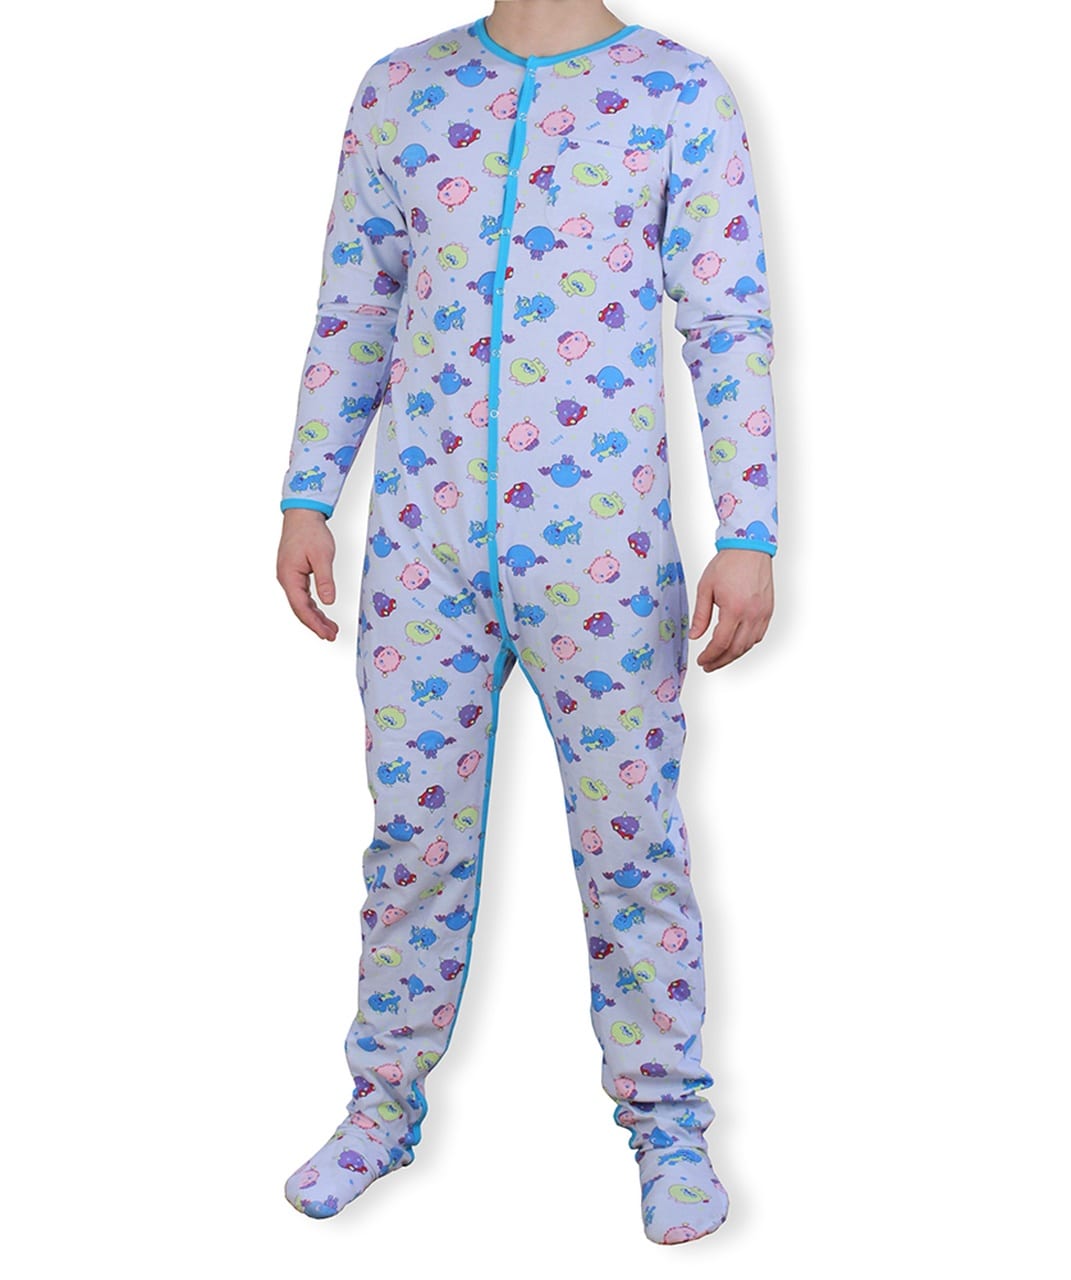 Rearz Lil Monsters Footed Pyjamas